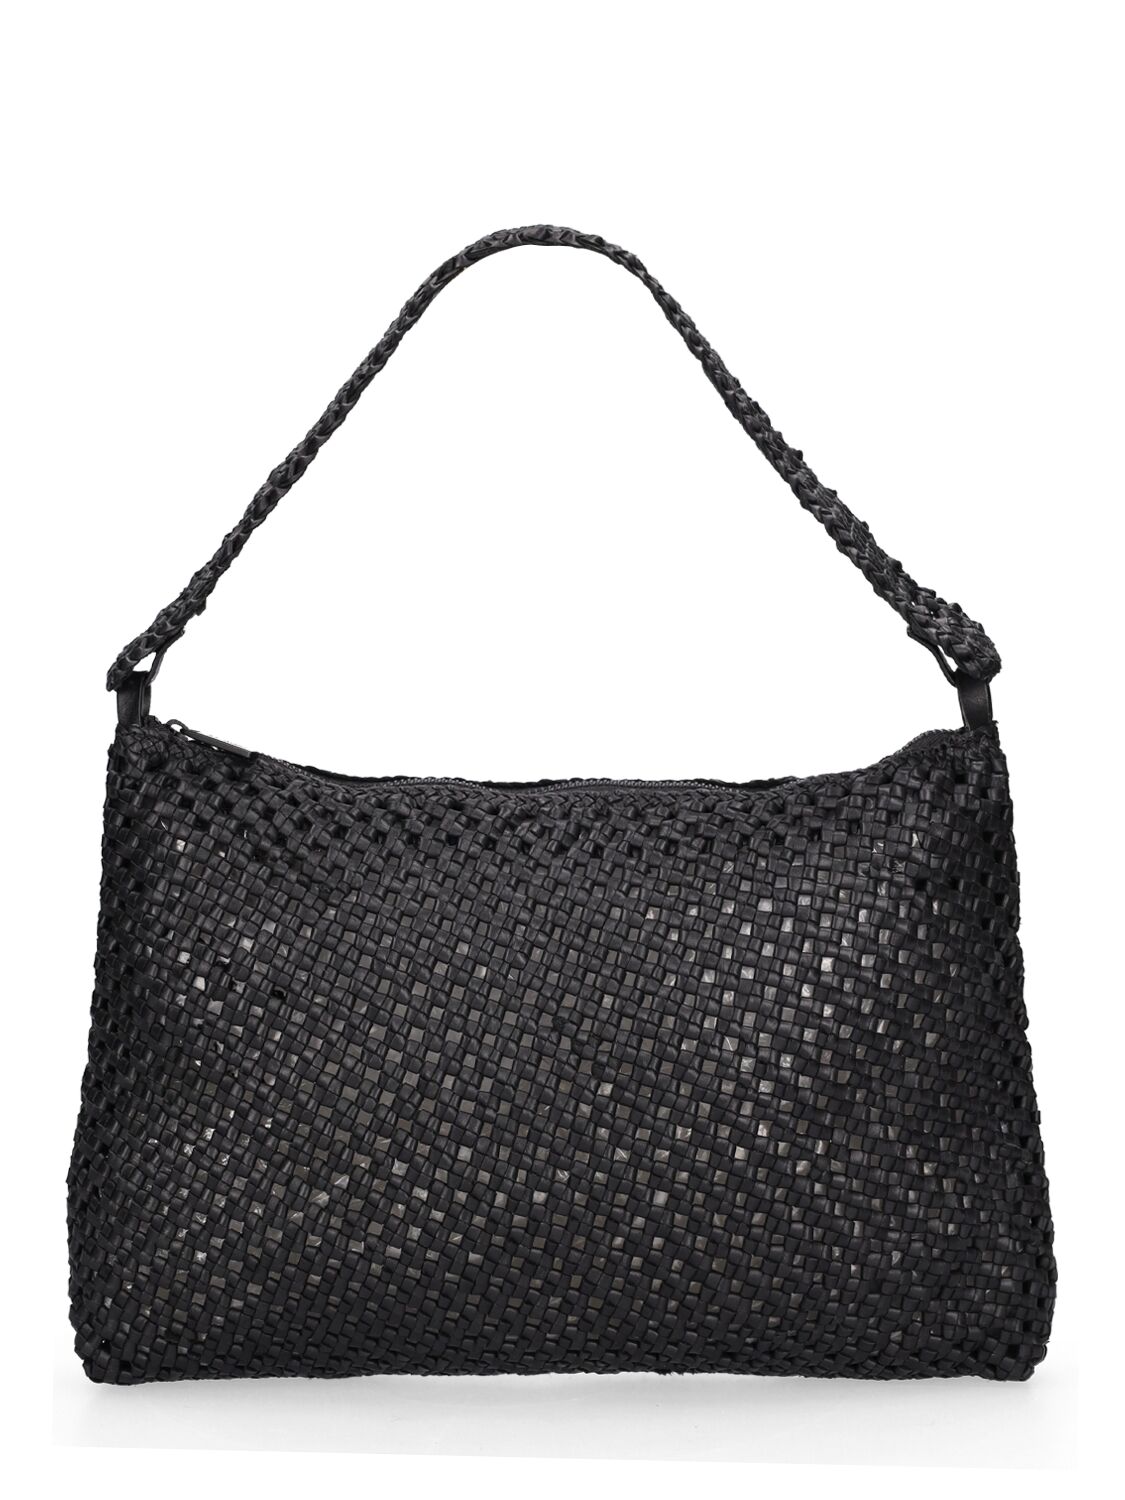 Image of Macramé Woven Leather Shoulder Bag